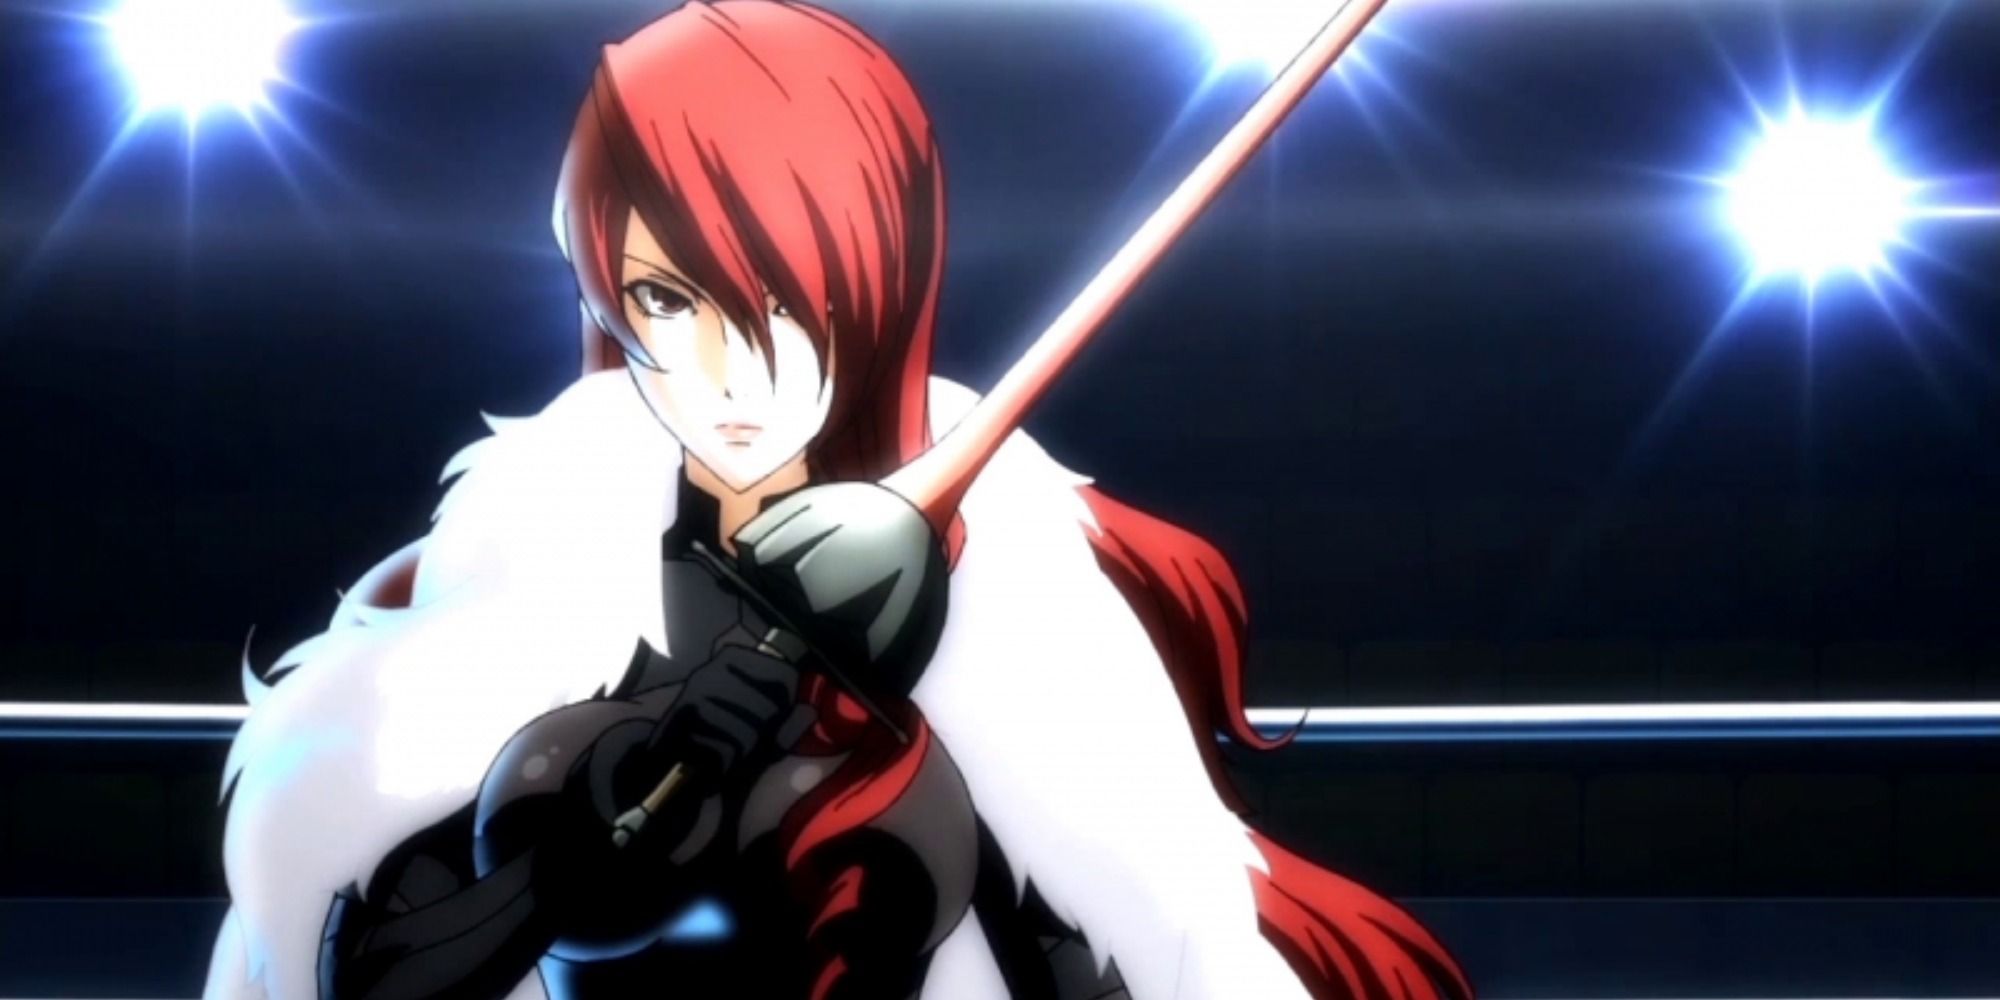 Mitsuru Kirijo wielding a rapier in her cinematic cutscene in Persona 4 Arena